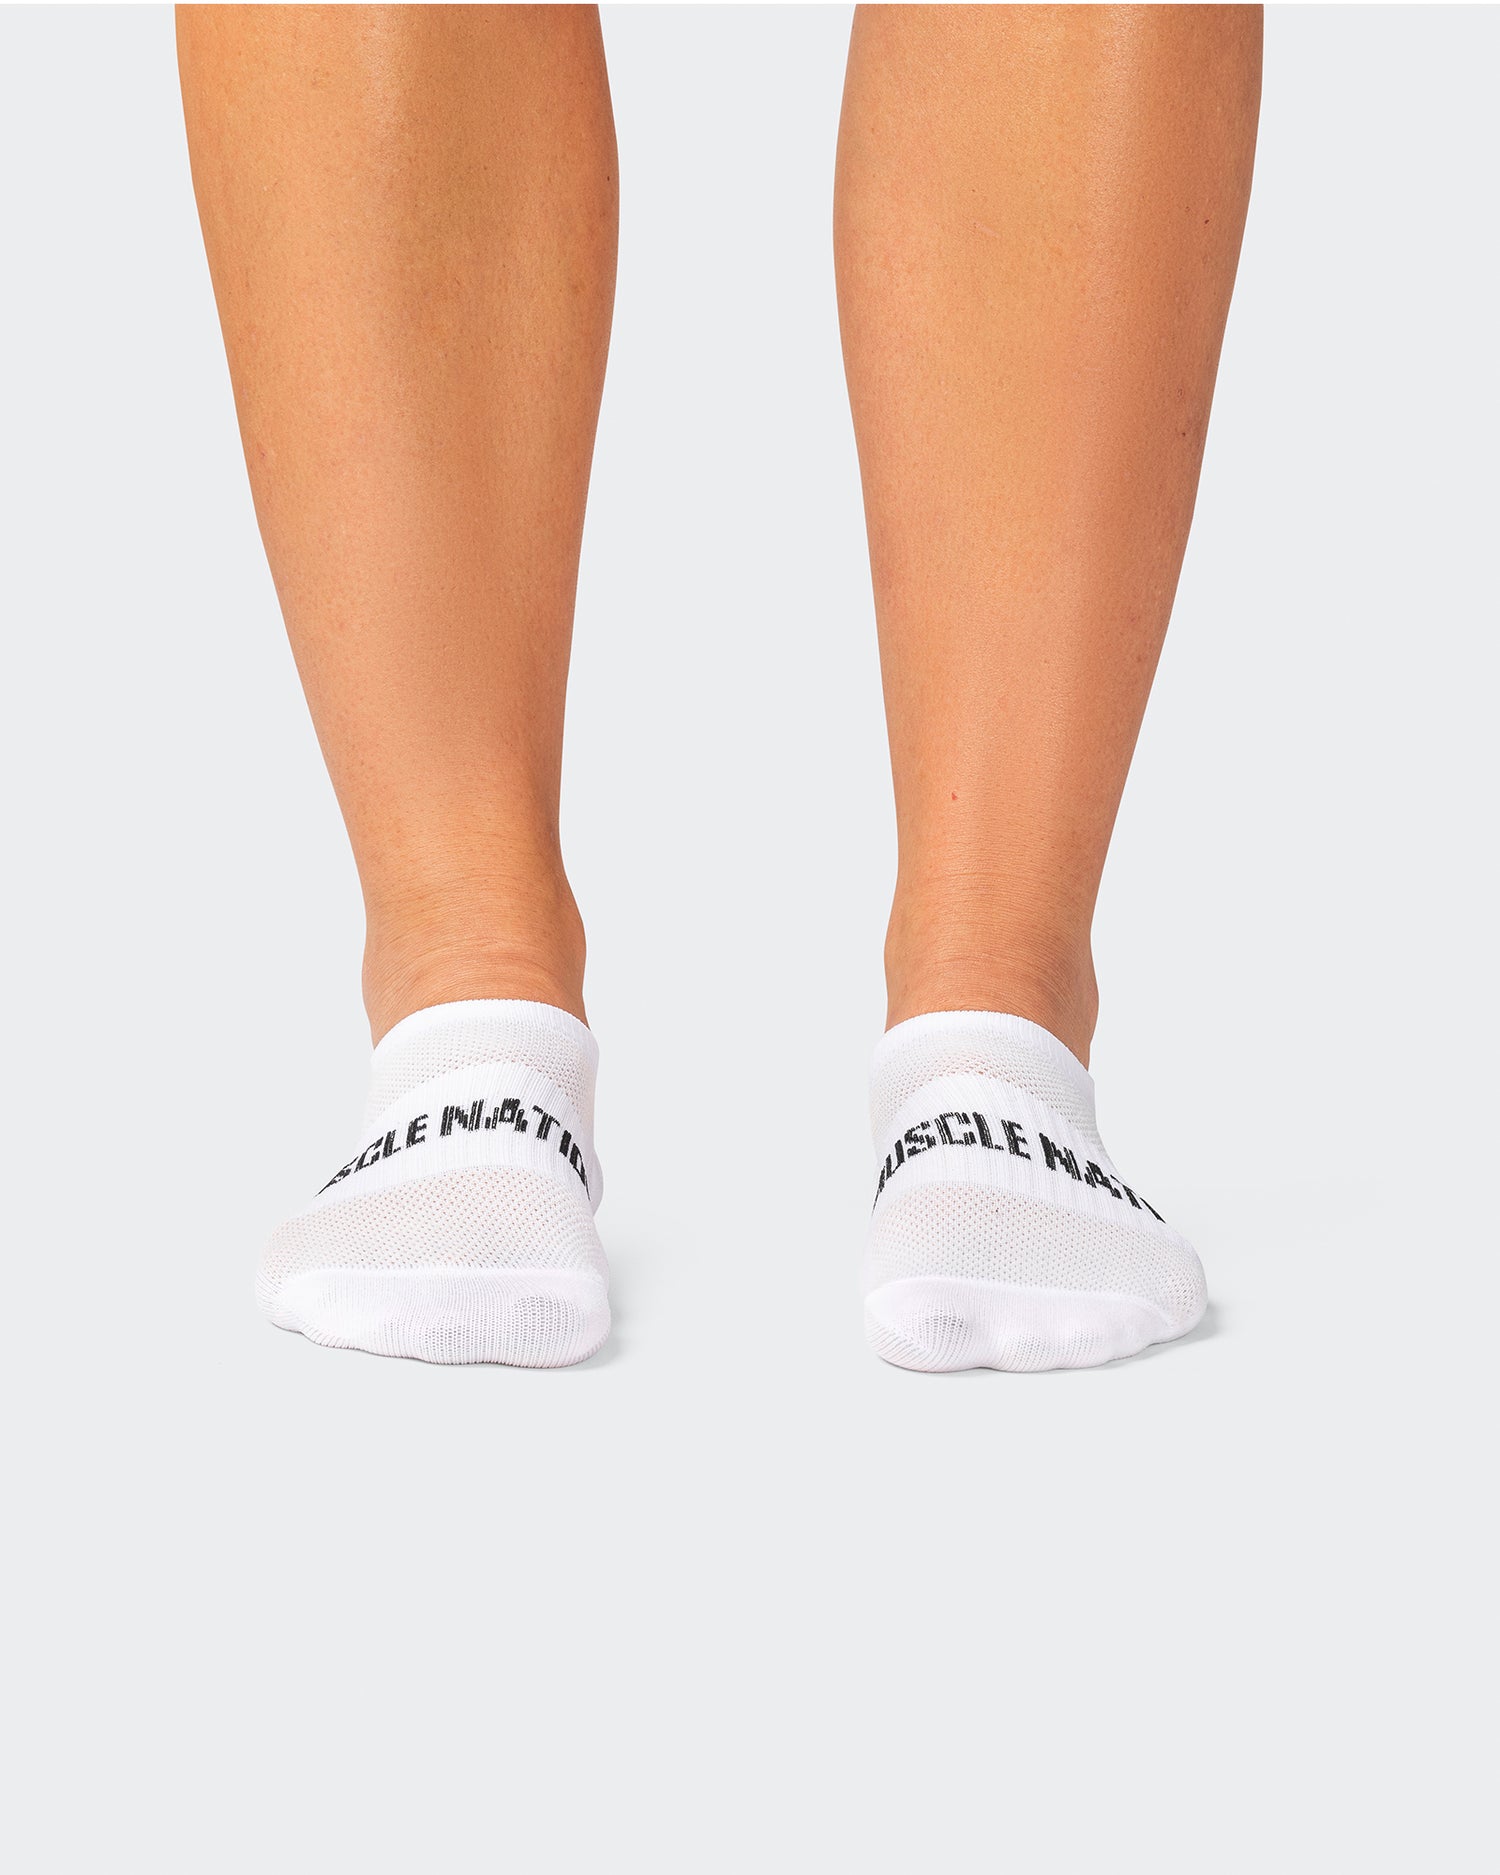 Womens Low Cut No Show Socks - White (2 Pack)